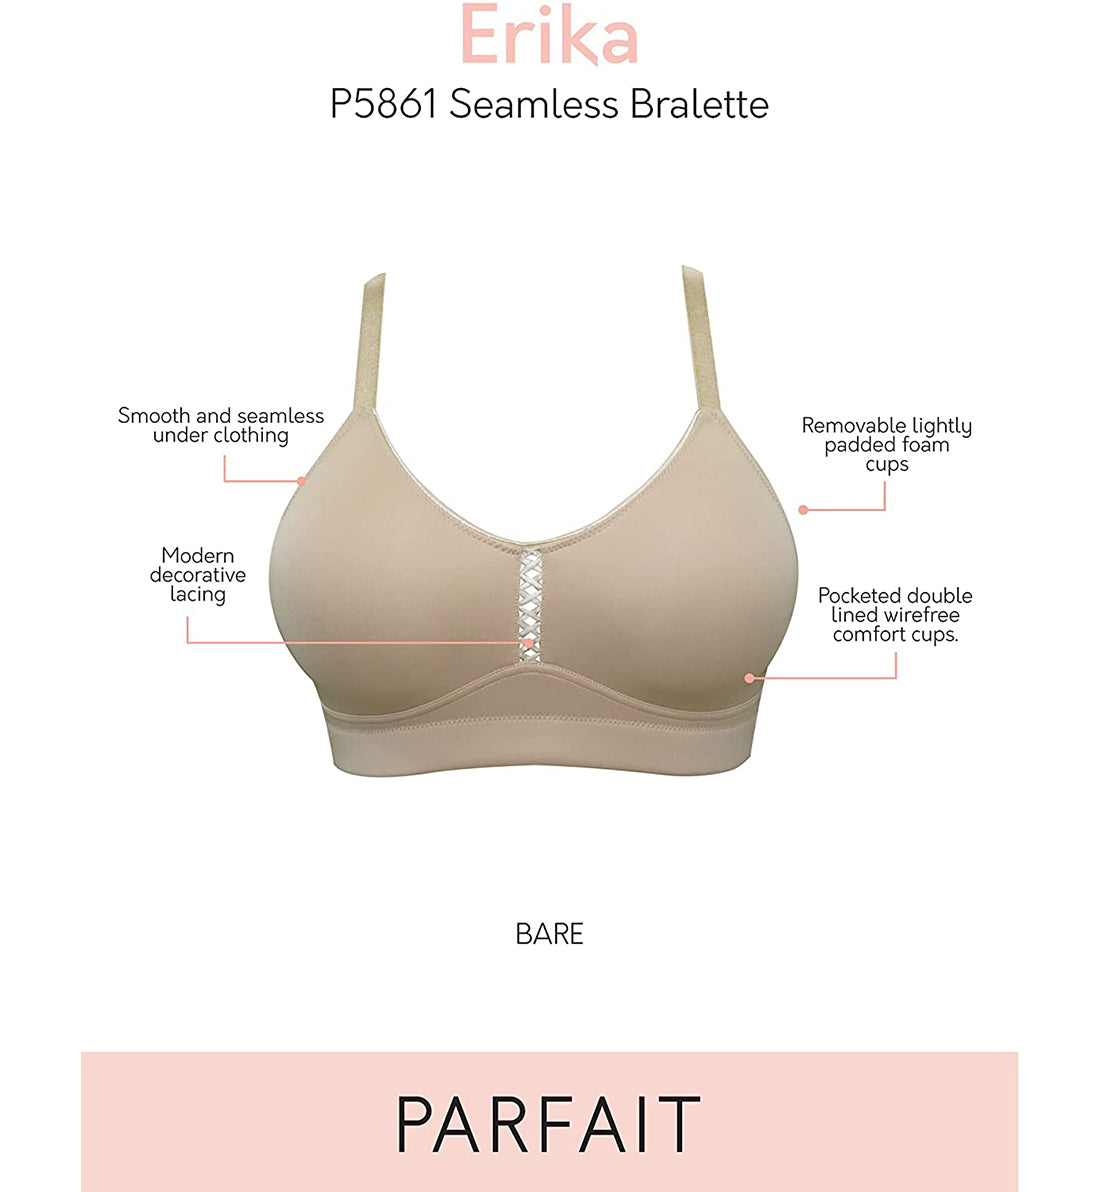 Parfait Erika Seamless Bralette (P5861),32C,Bare - Bare,32C